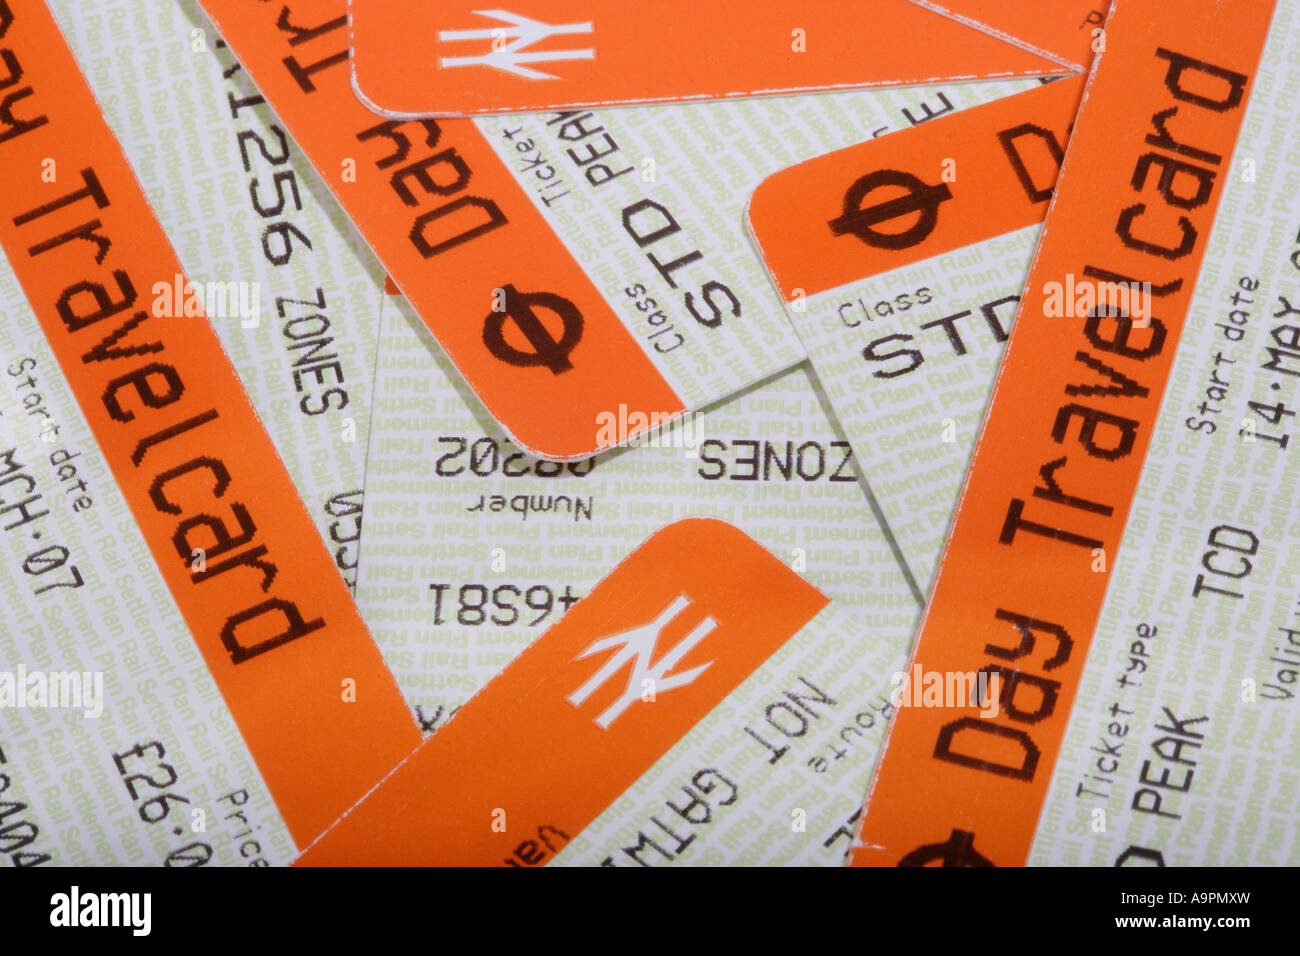 Day Travelcard UK Train tickets Stock Photo - Alamy